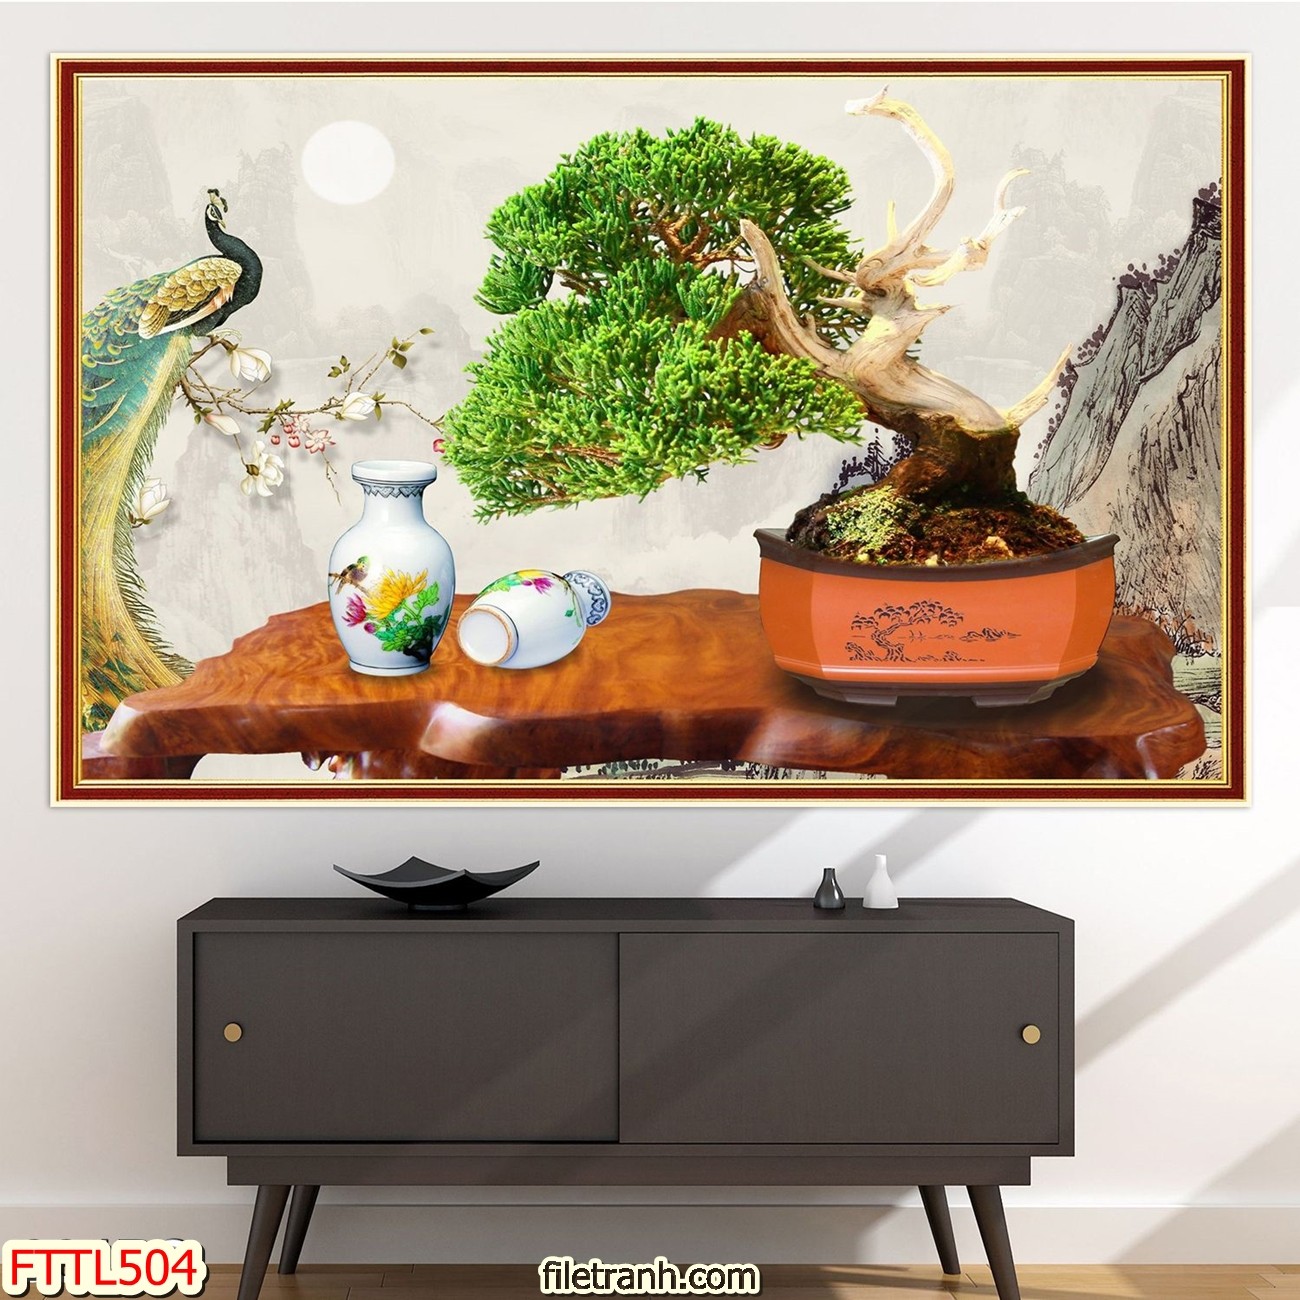 https://filetranh.com/file-tranh-chau-mai-bonsai/file-tranh-chau-mai-bonsai-fttl504.html